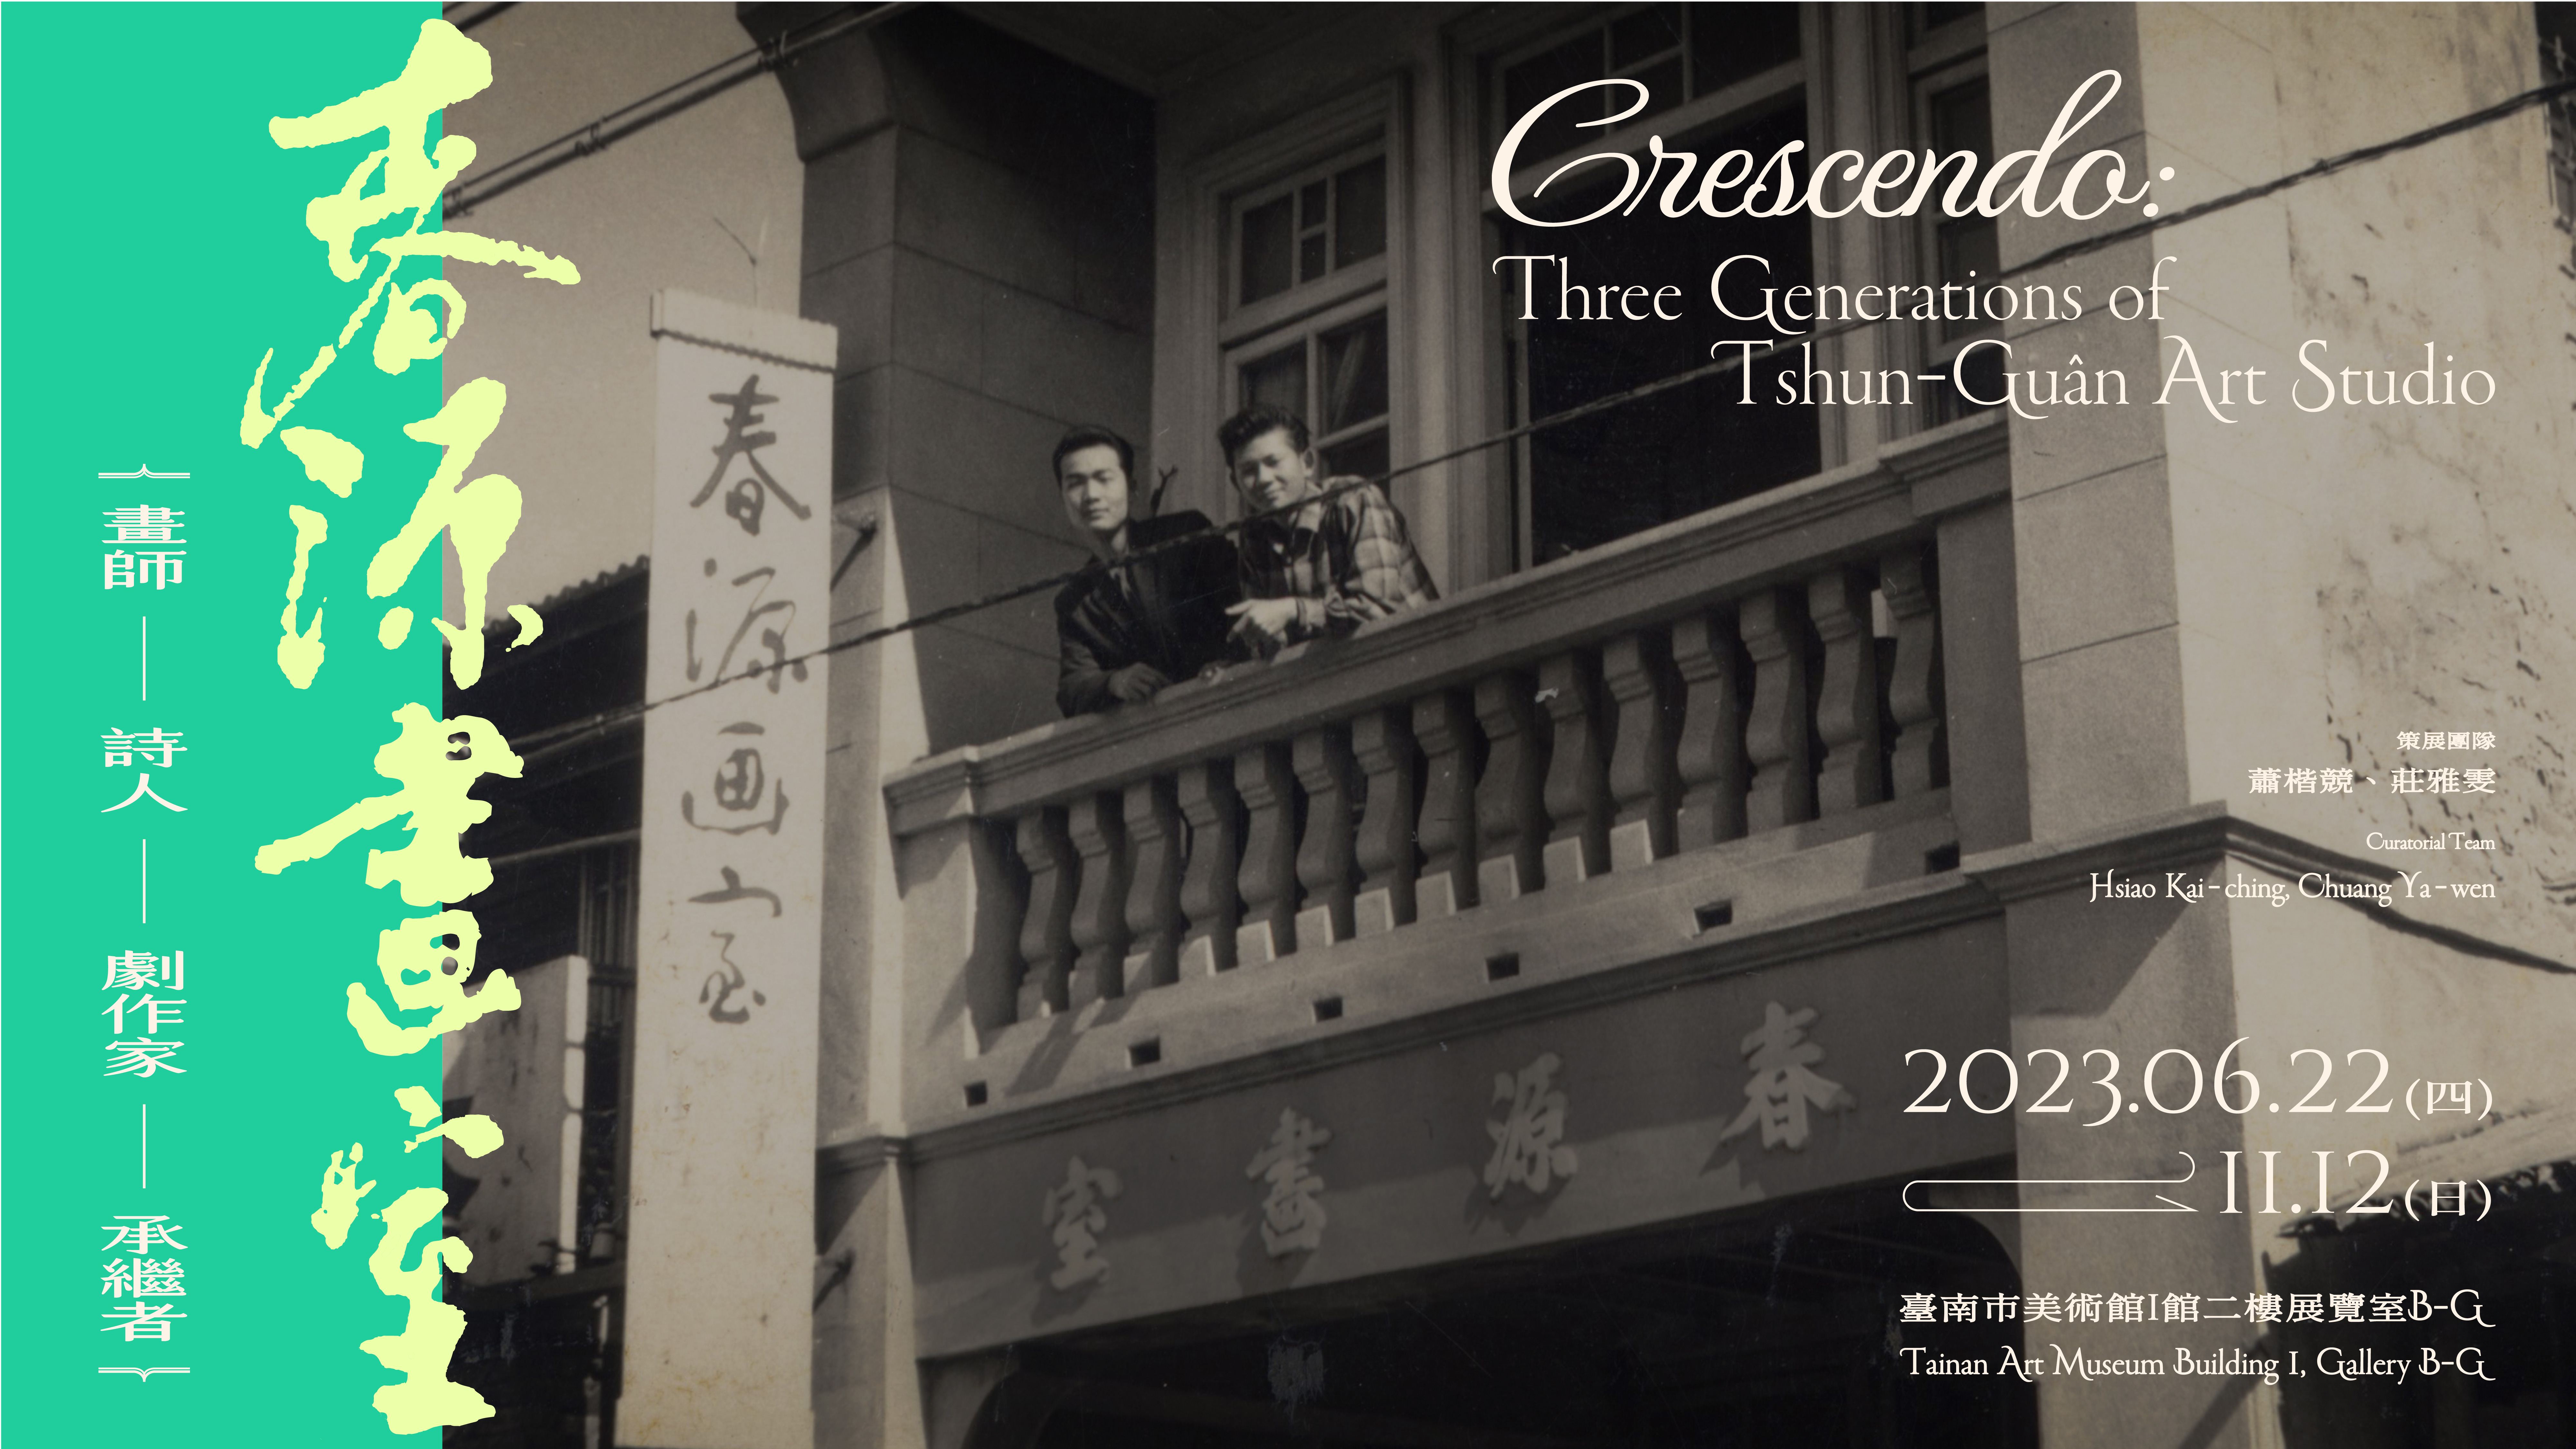 春源畫室：畫師—詩人—劇作家—承繼者  Crescendo: Three Generations of Tshun-Guân Art Studio